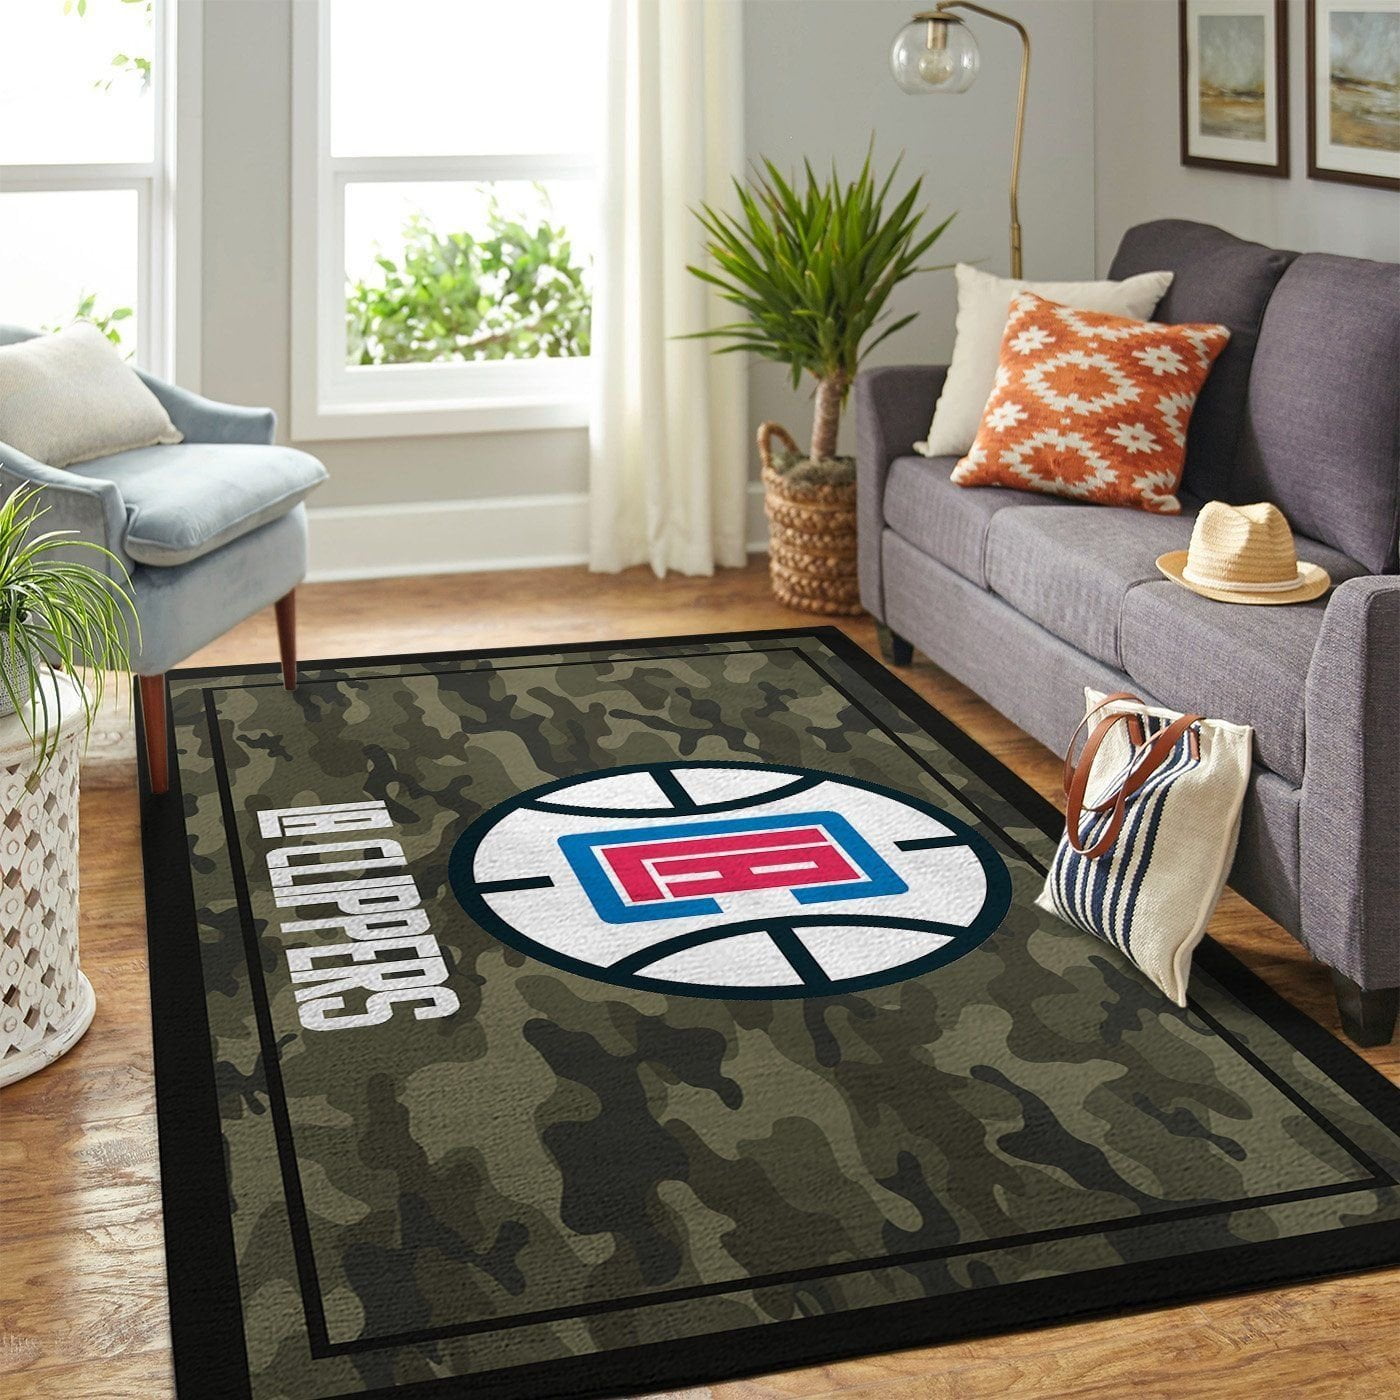 La Clippers Nba Team Logo Camo Style Nice Gift Home Decor Rectangle Area Rug - Indoor Outdoor Rugs